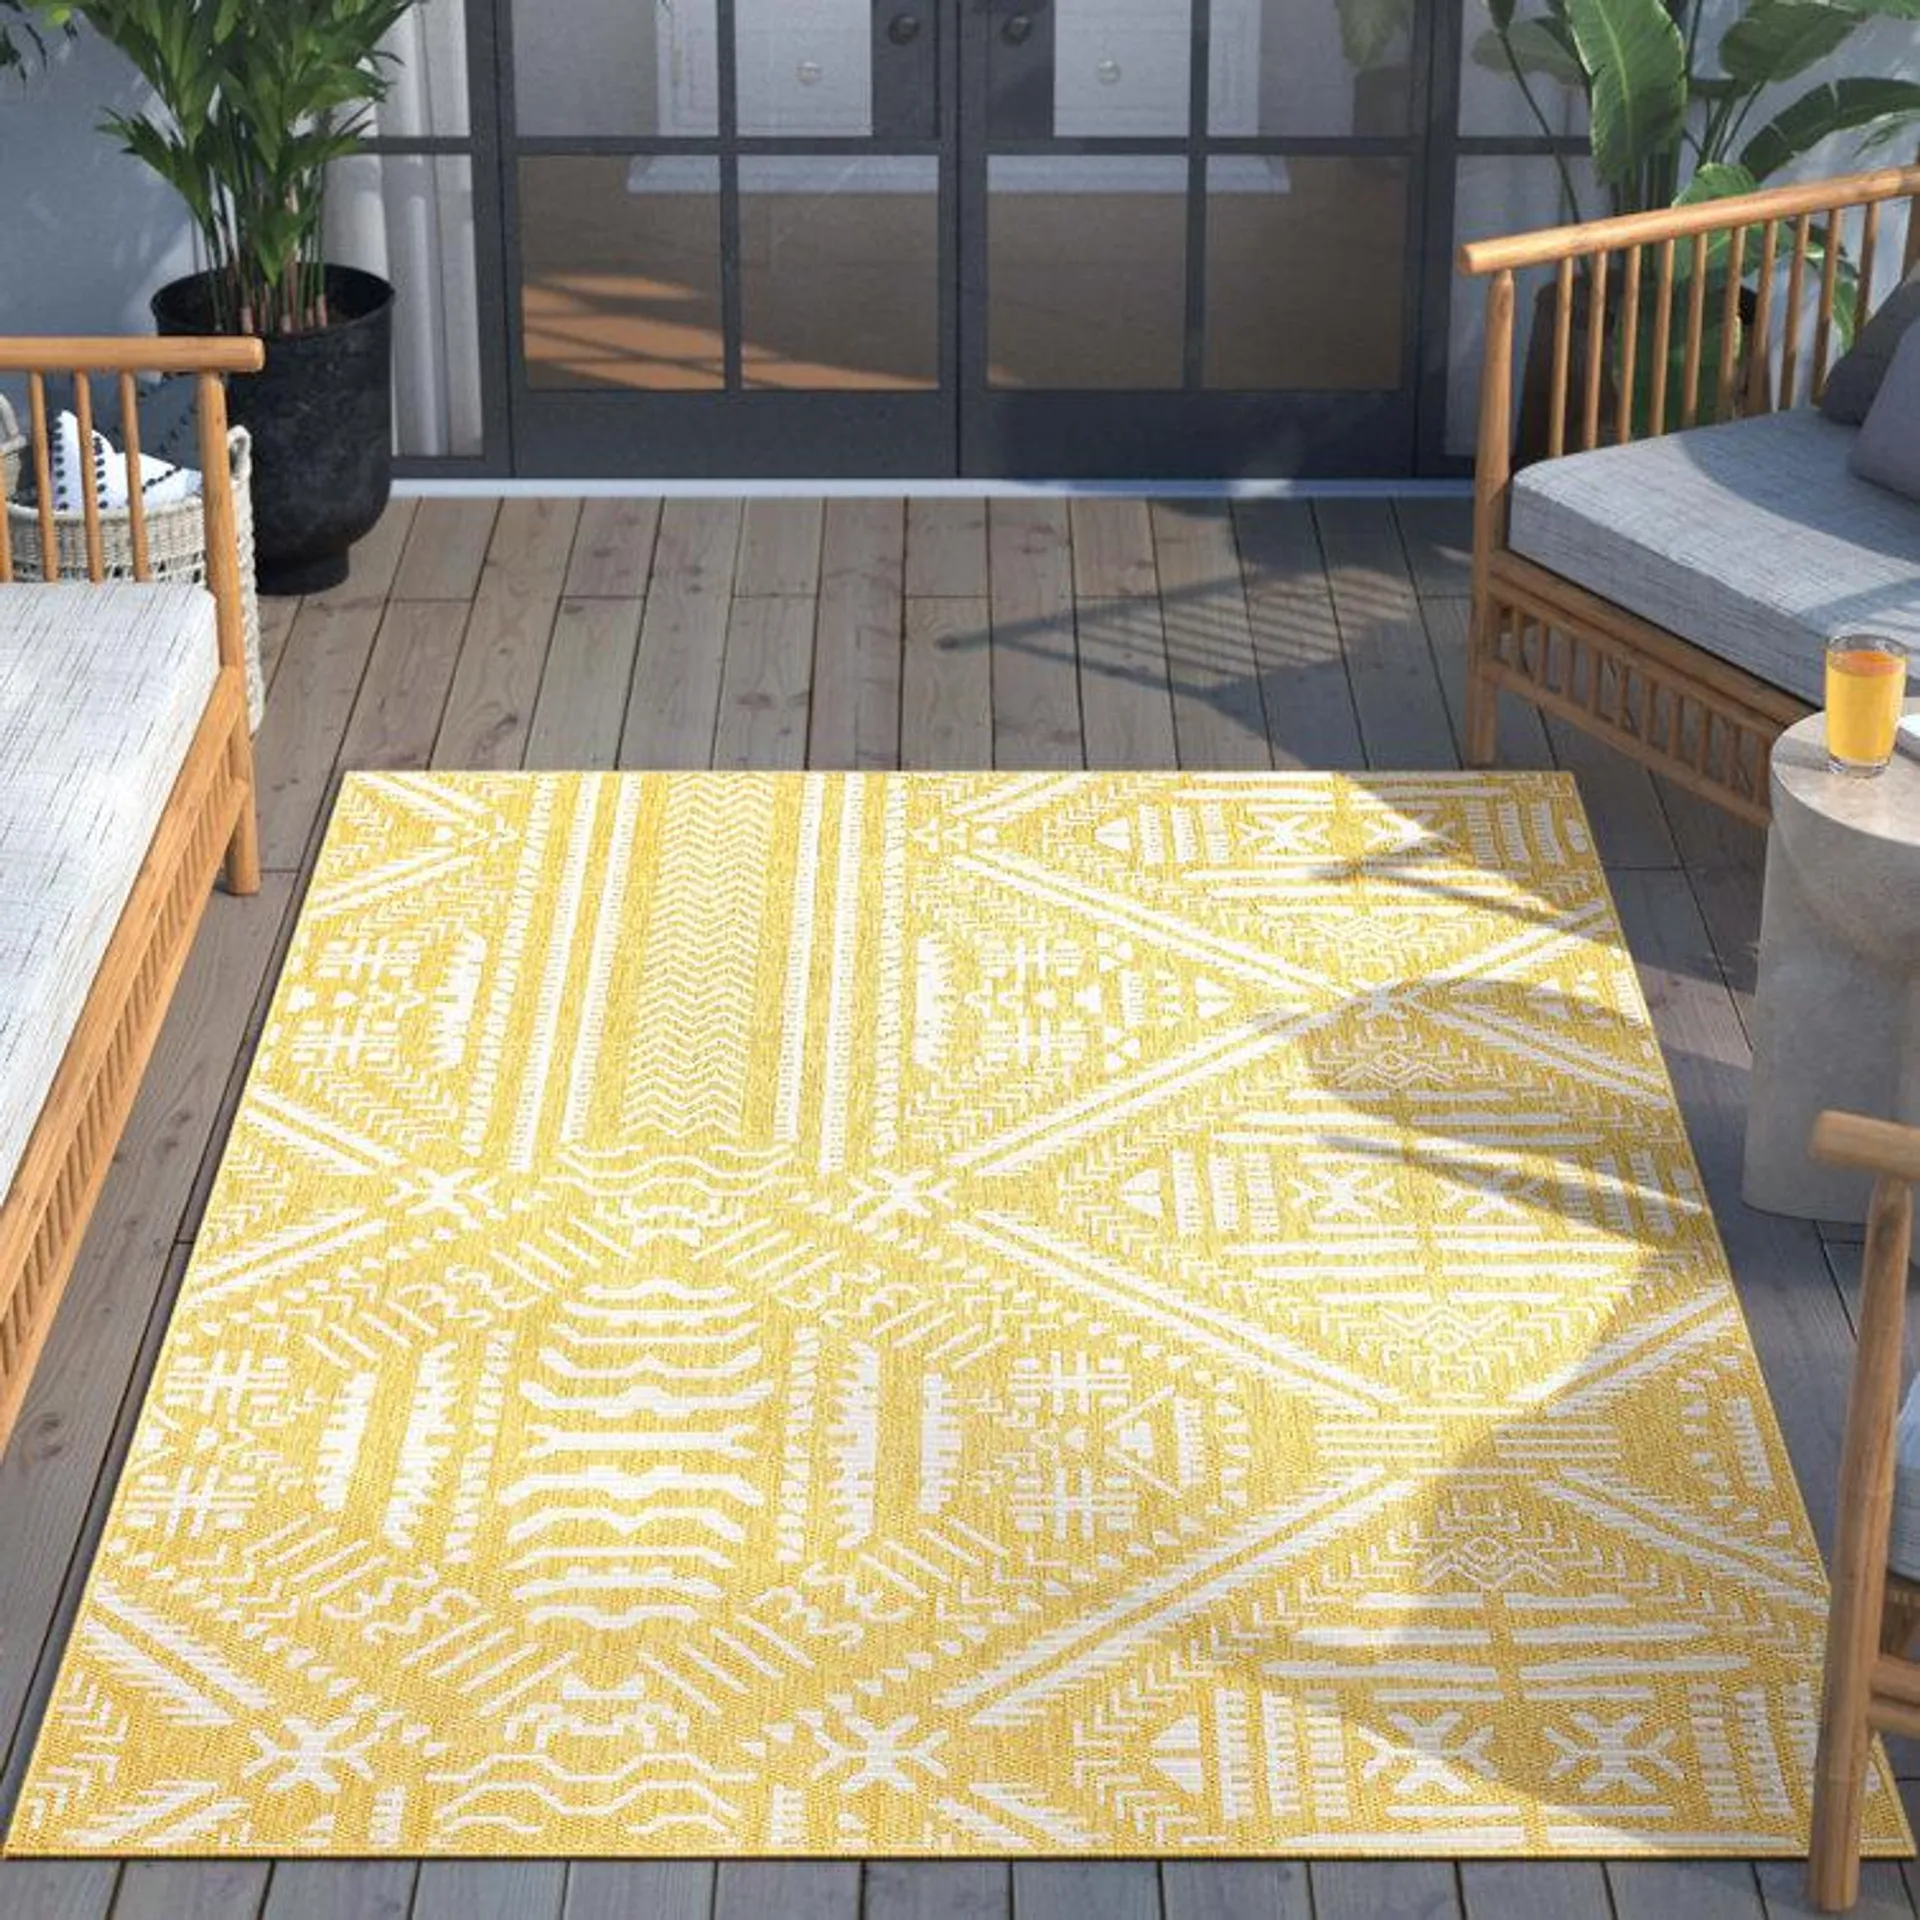 Well Woven Medusa Khalo Geometric Flat-Weave Indoor/Outdoor Area Rug